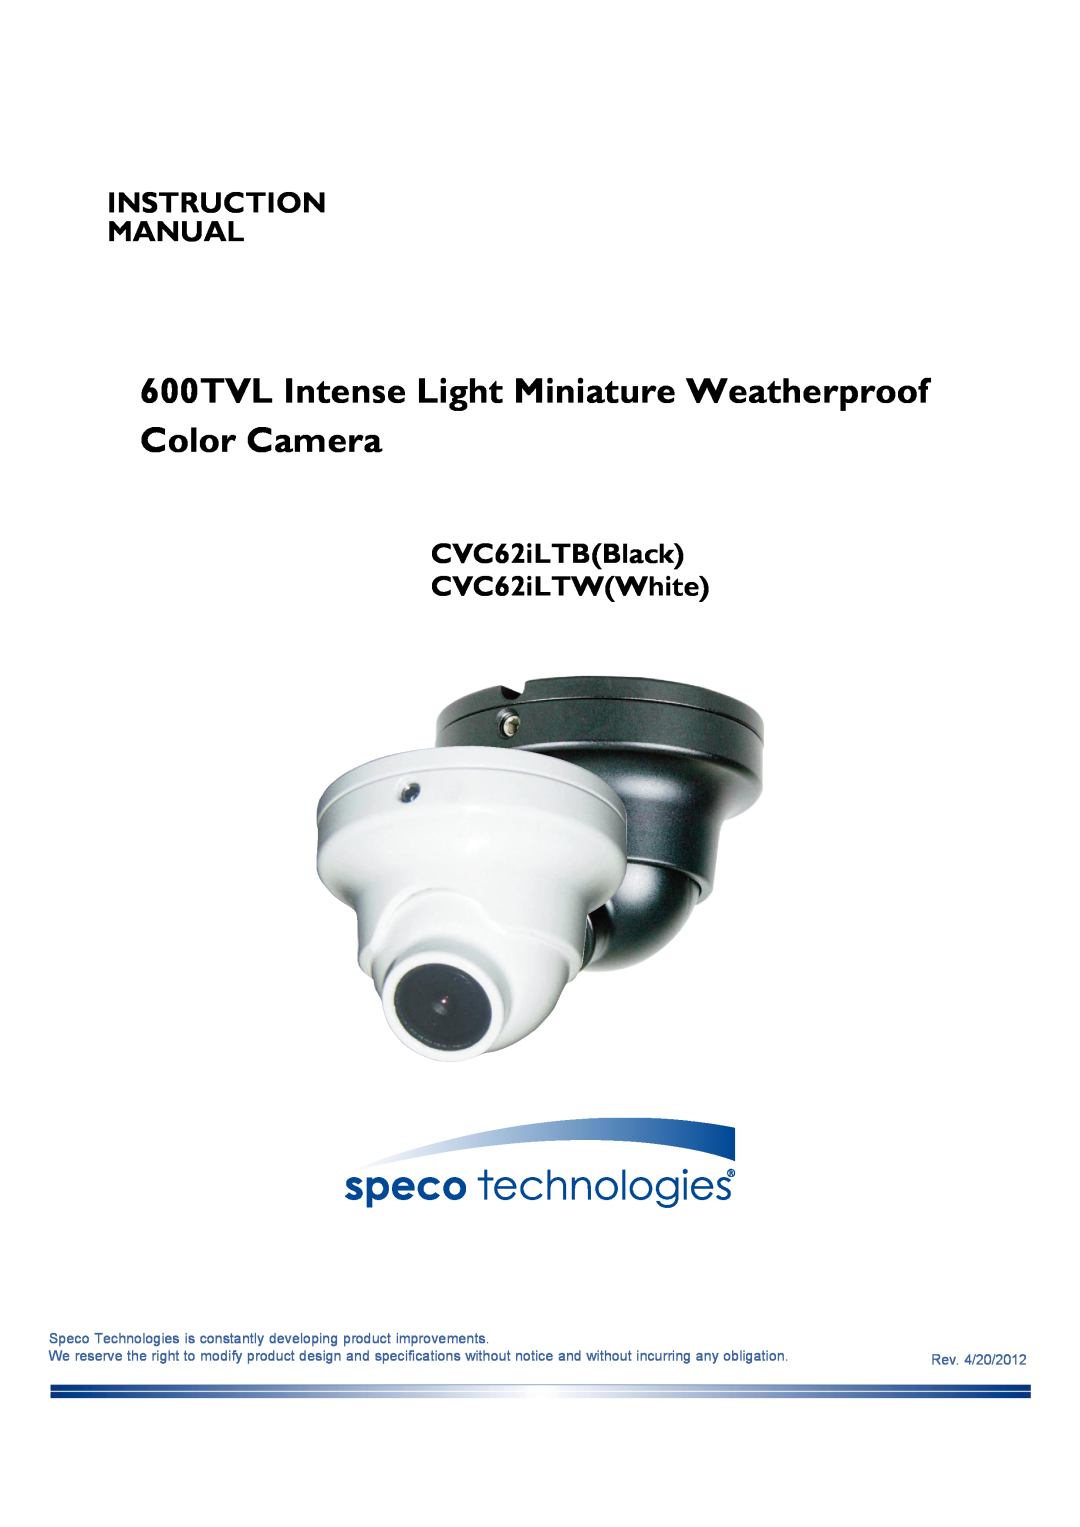 Speco Technologies CVC 62iLTB specifications Instruction Manual, CVC62iLTBBlack CVC62iLTWWhite, Rev. 4/20/2012 